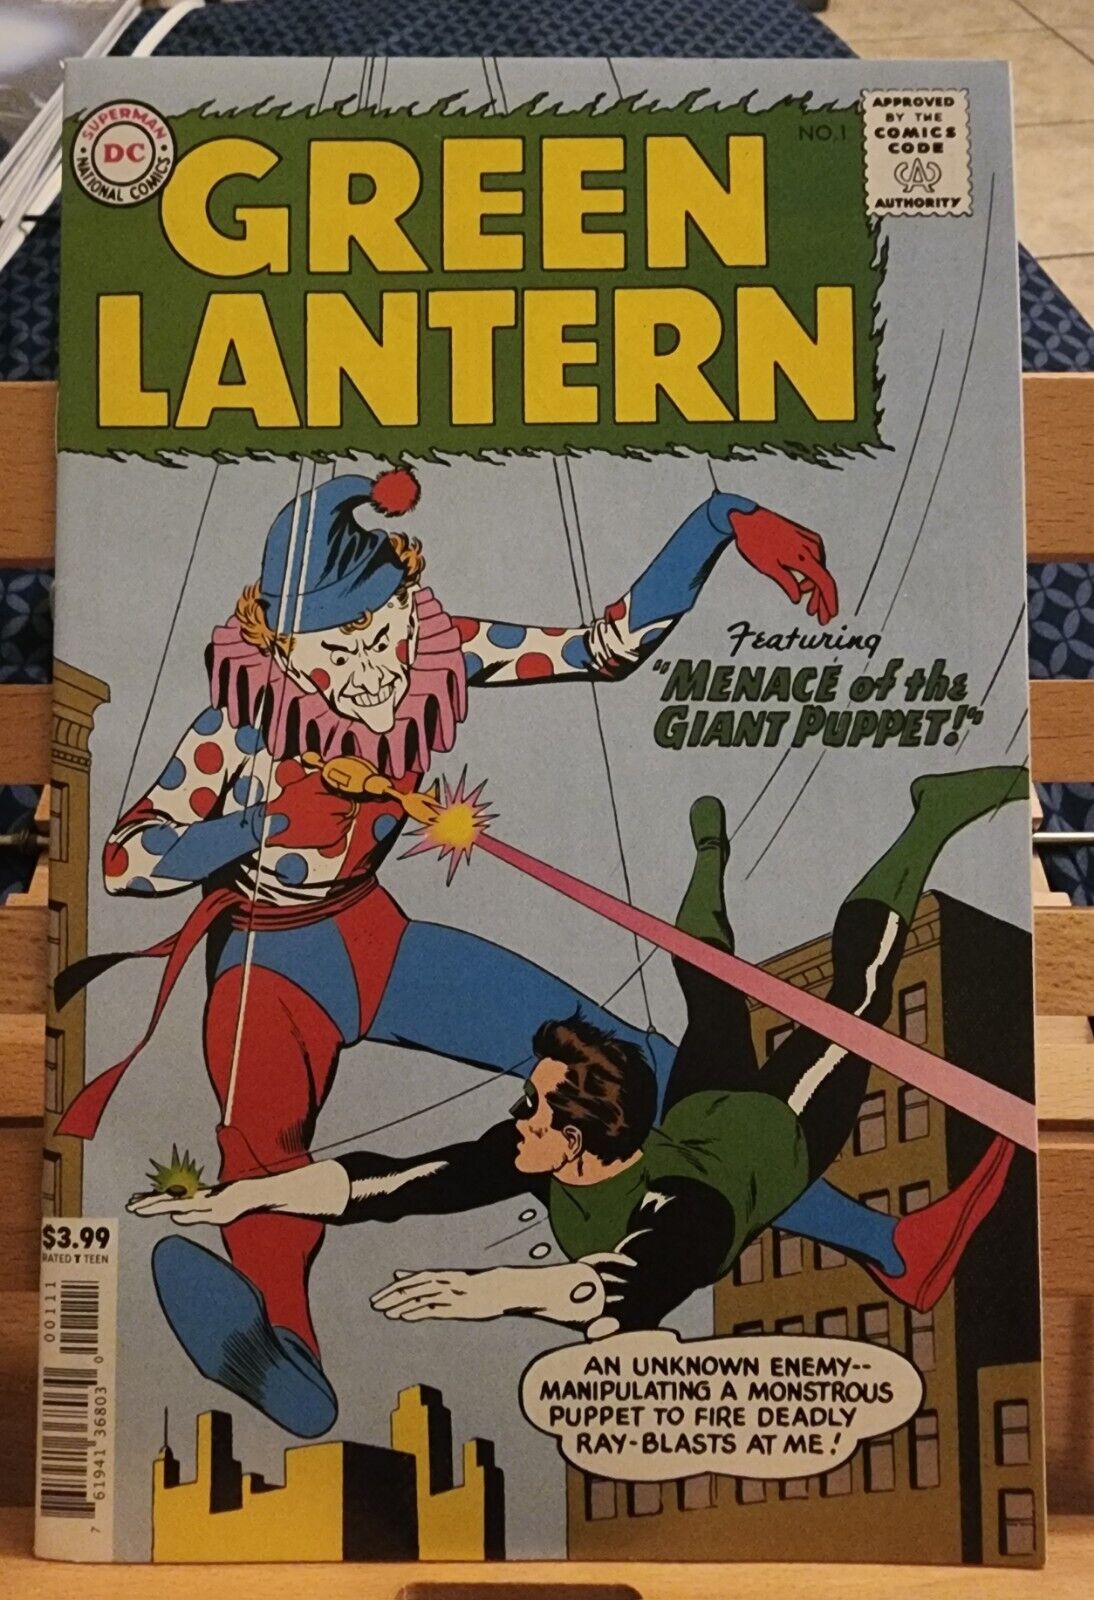 GREEN LANTERN #1 DC COMICS FACSIMILE EDITION - ORIGIN RETOLD - GIL KANE COVER 